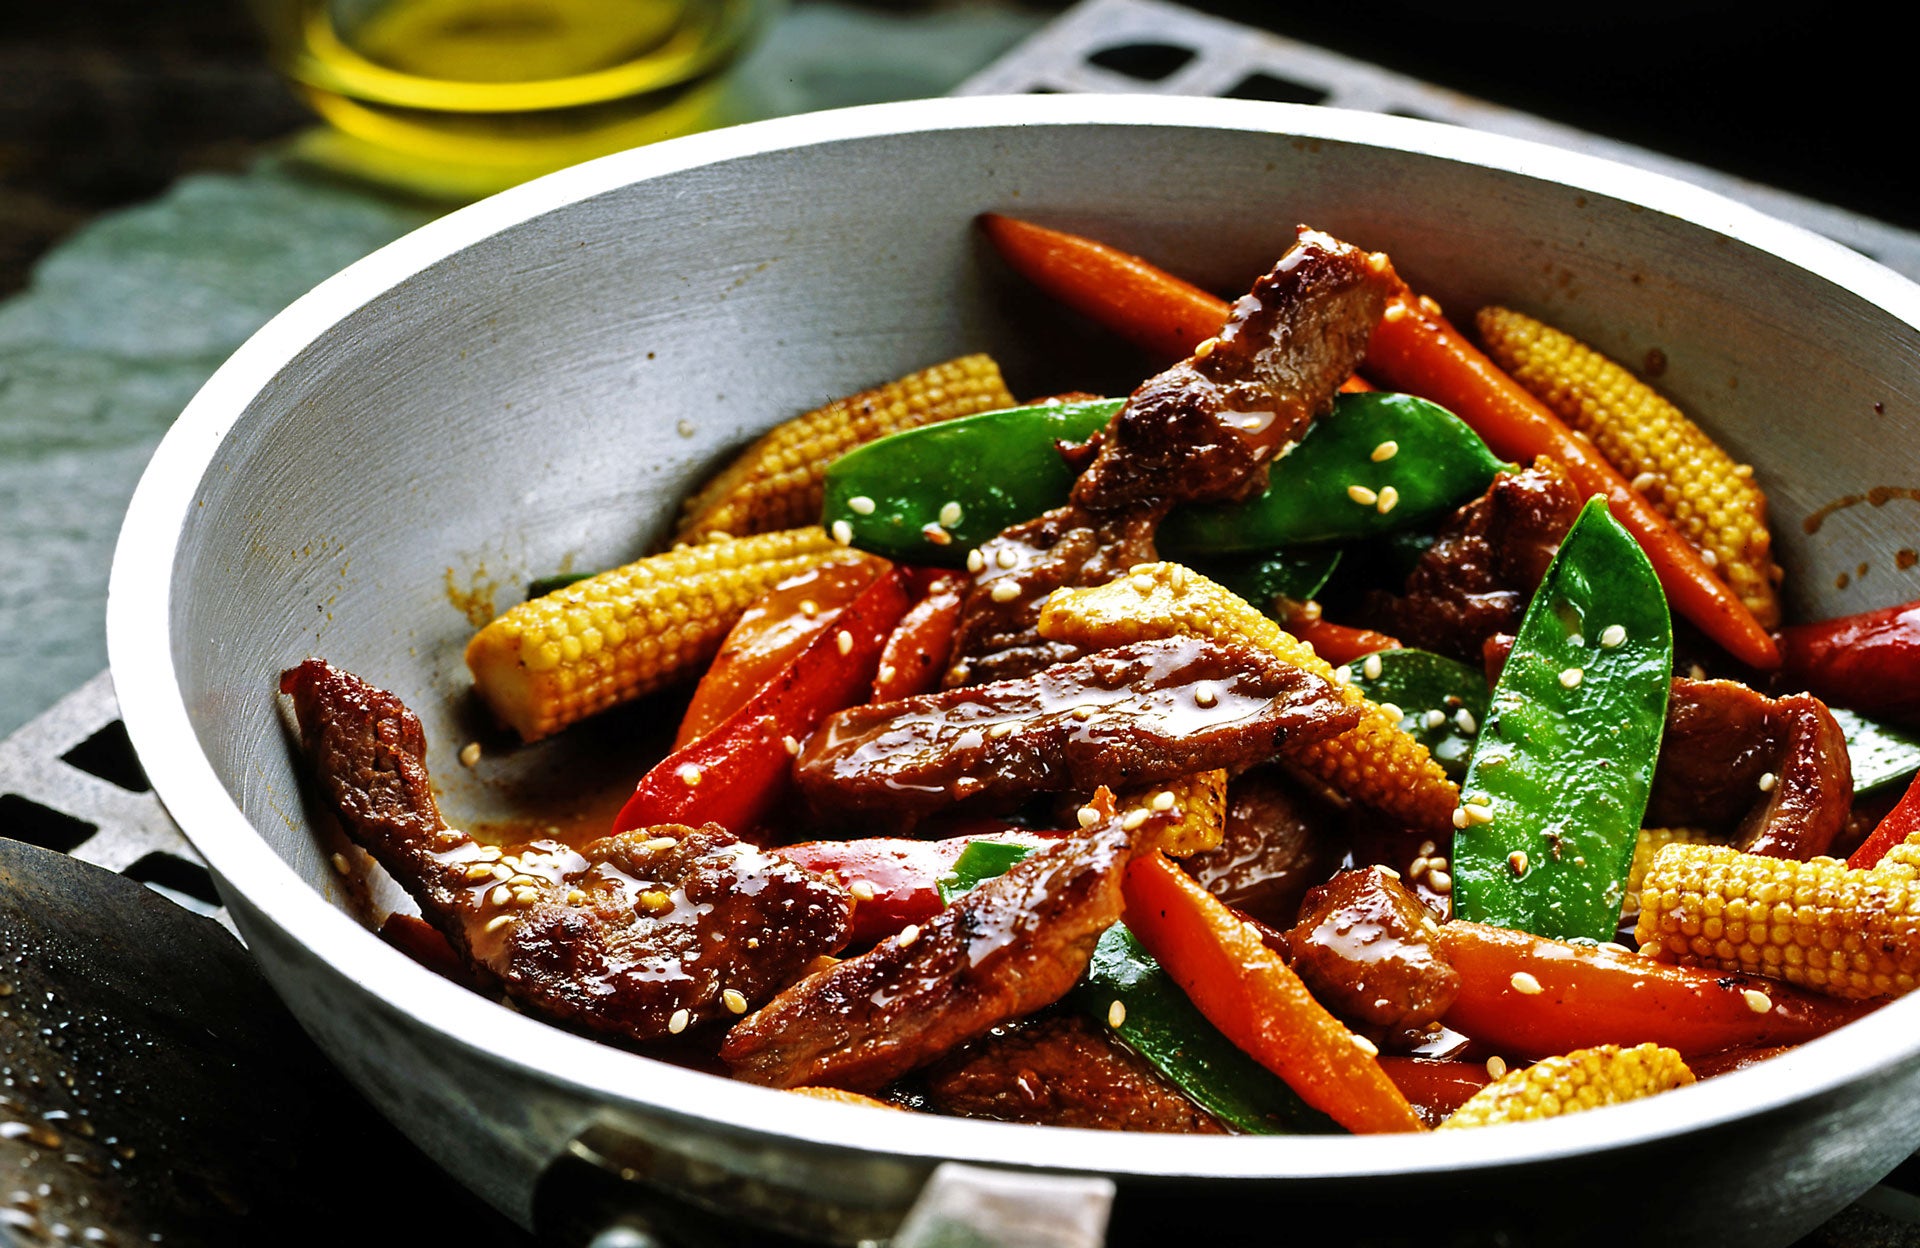 The best woks to transform your stir fry